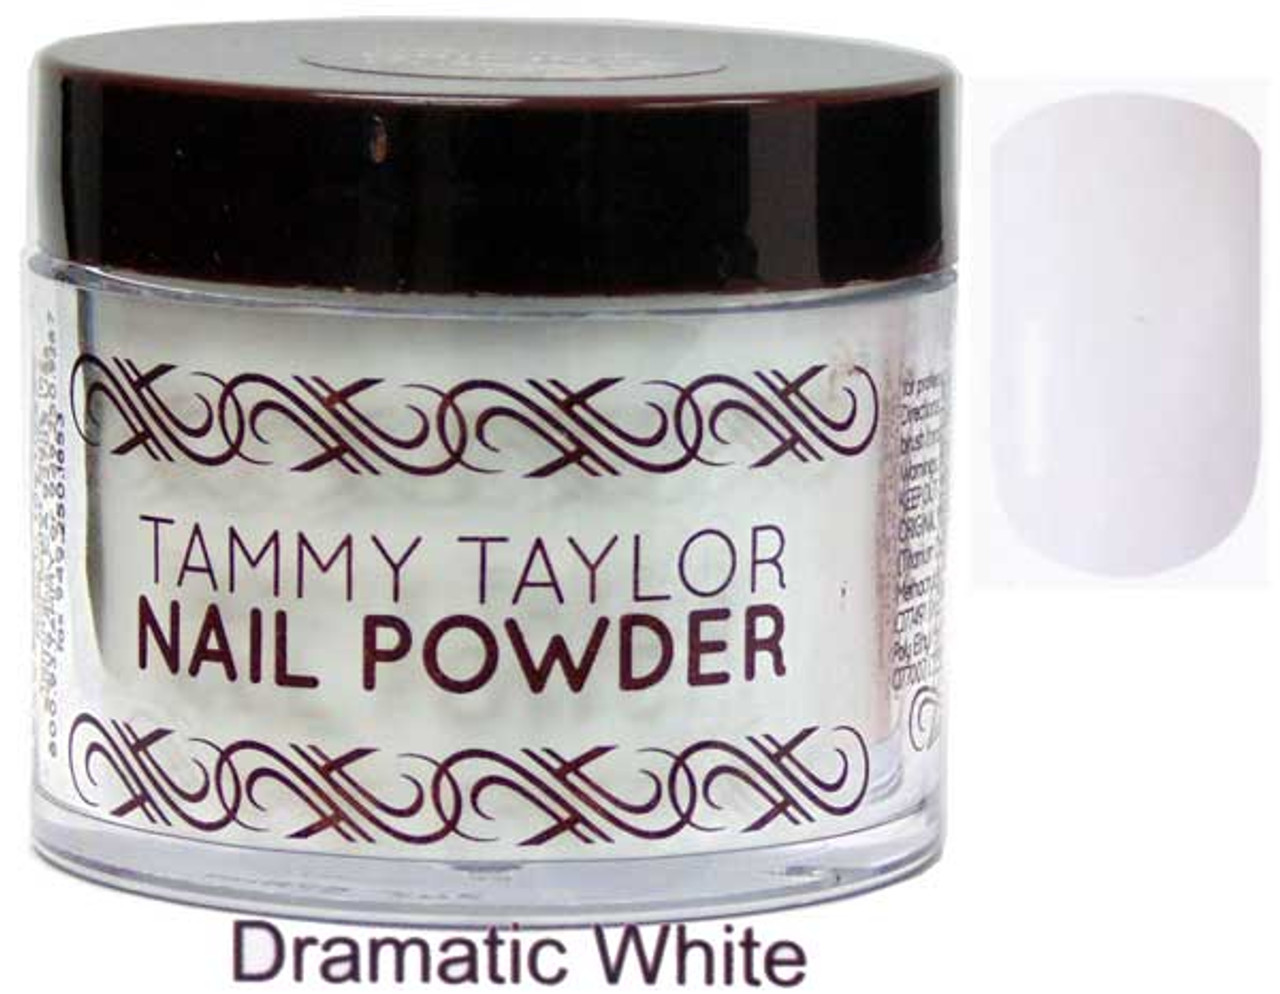 Tammy Taylor Dramatic White Nail Powder - 1.5oz